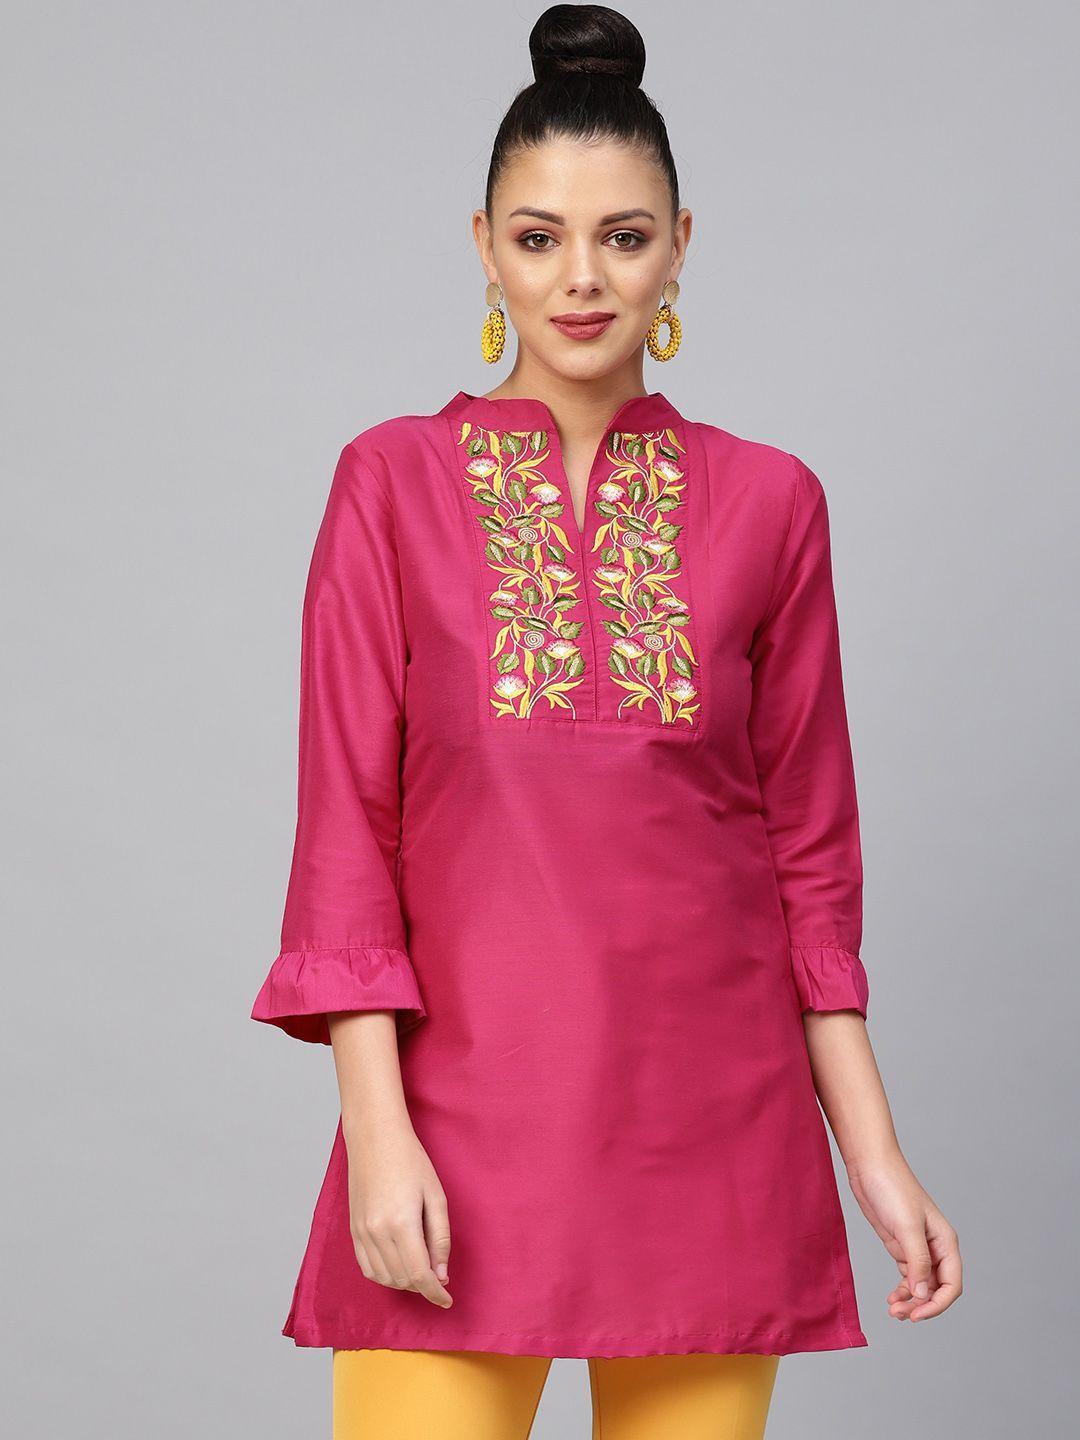 bhama couture women pink yoke design a-line kurti